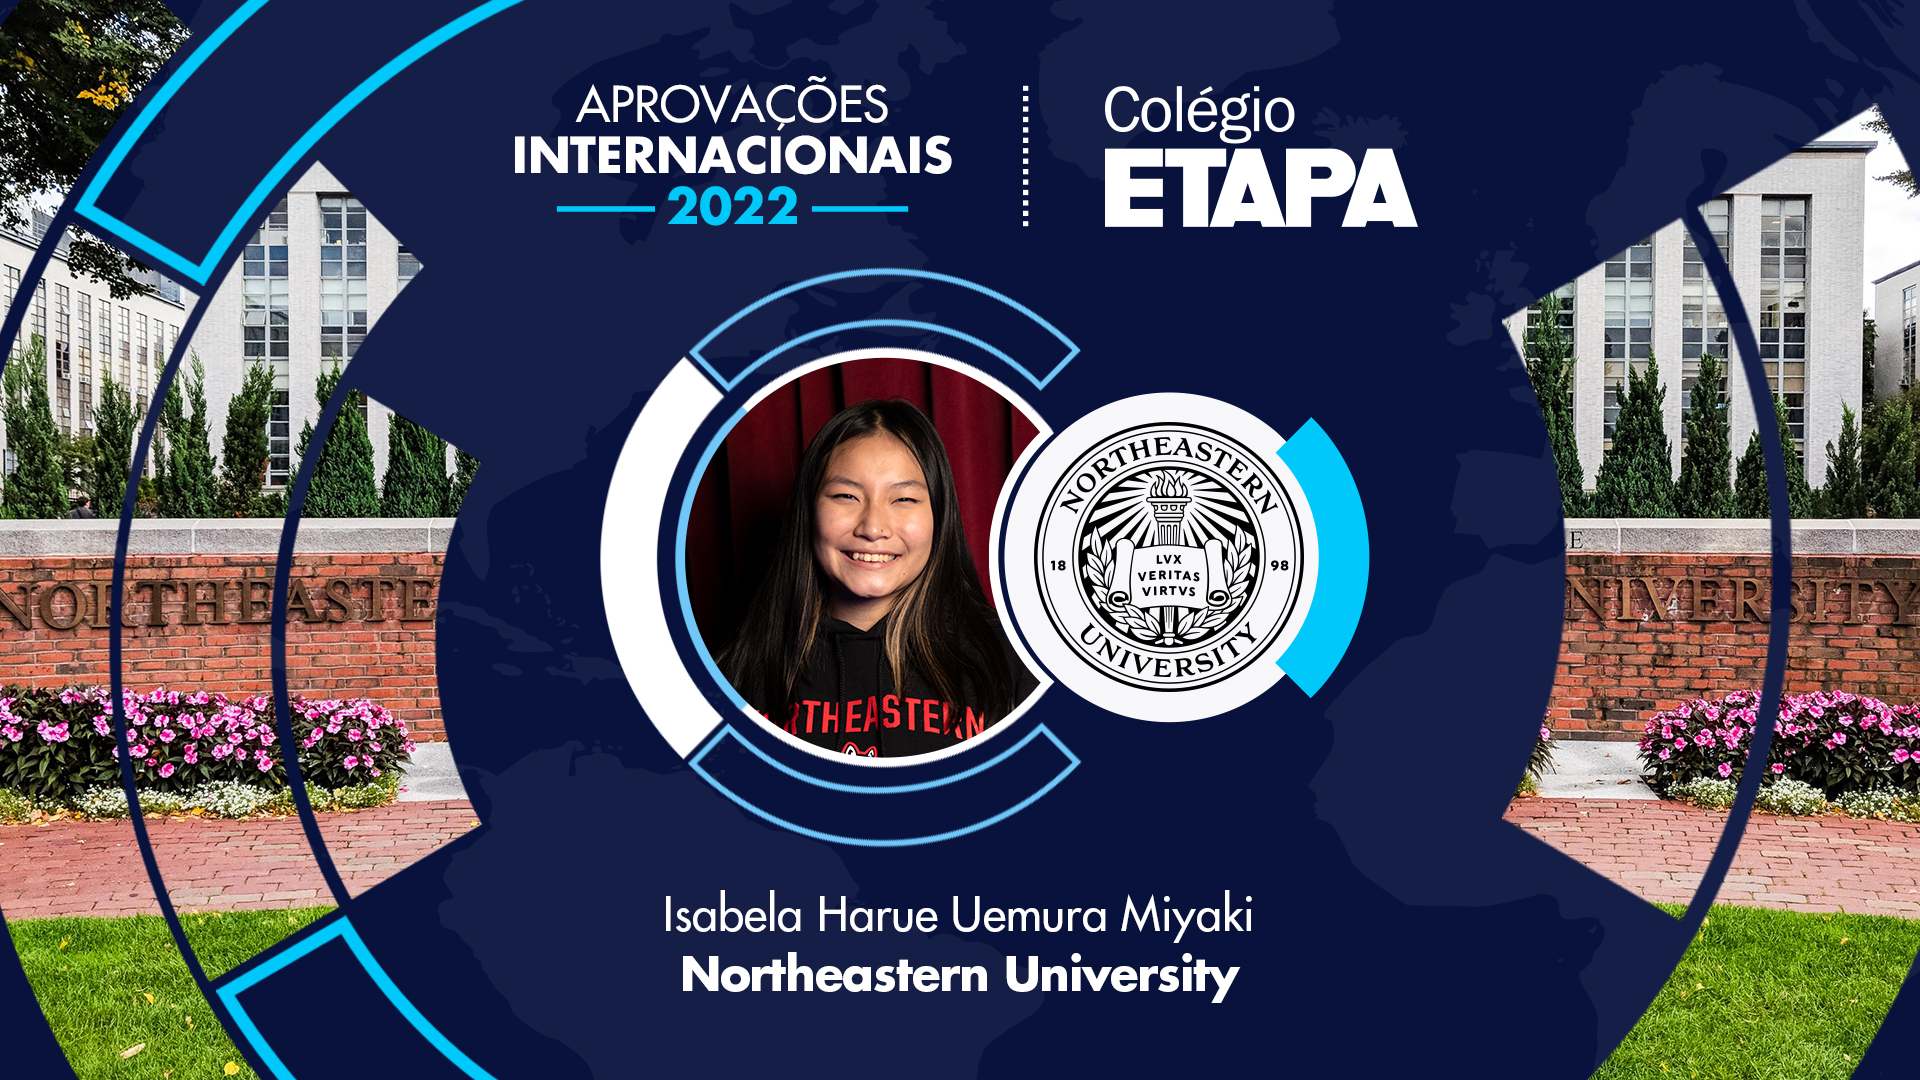 Isabela Harue Uemura Miyaki contou com o Setor Internacional do Etapa para o application e foi aprovada na Northeastern University.